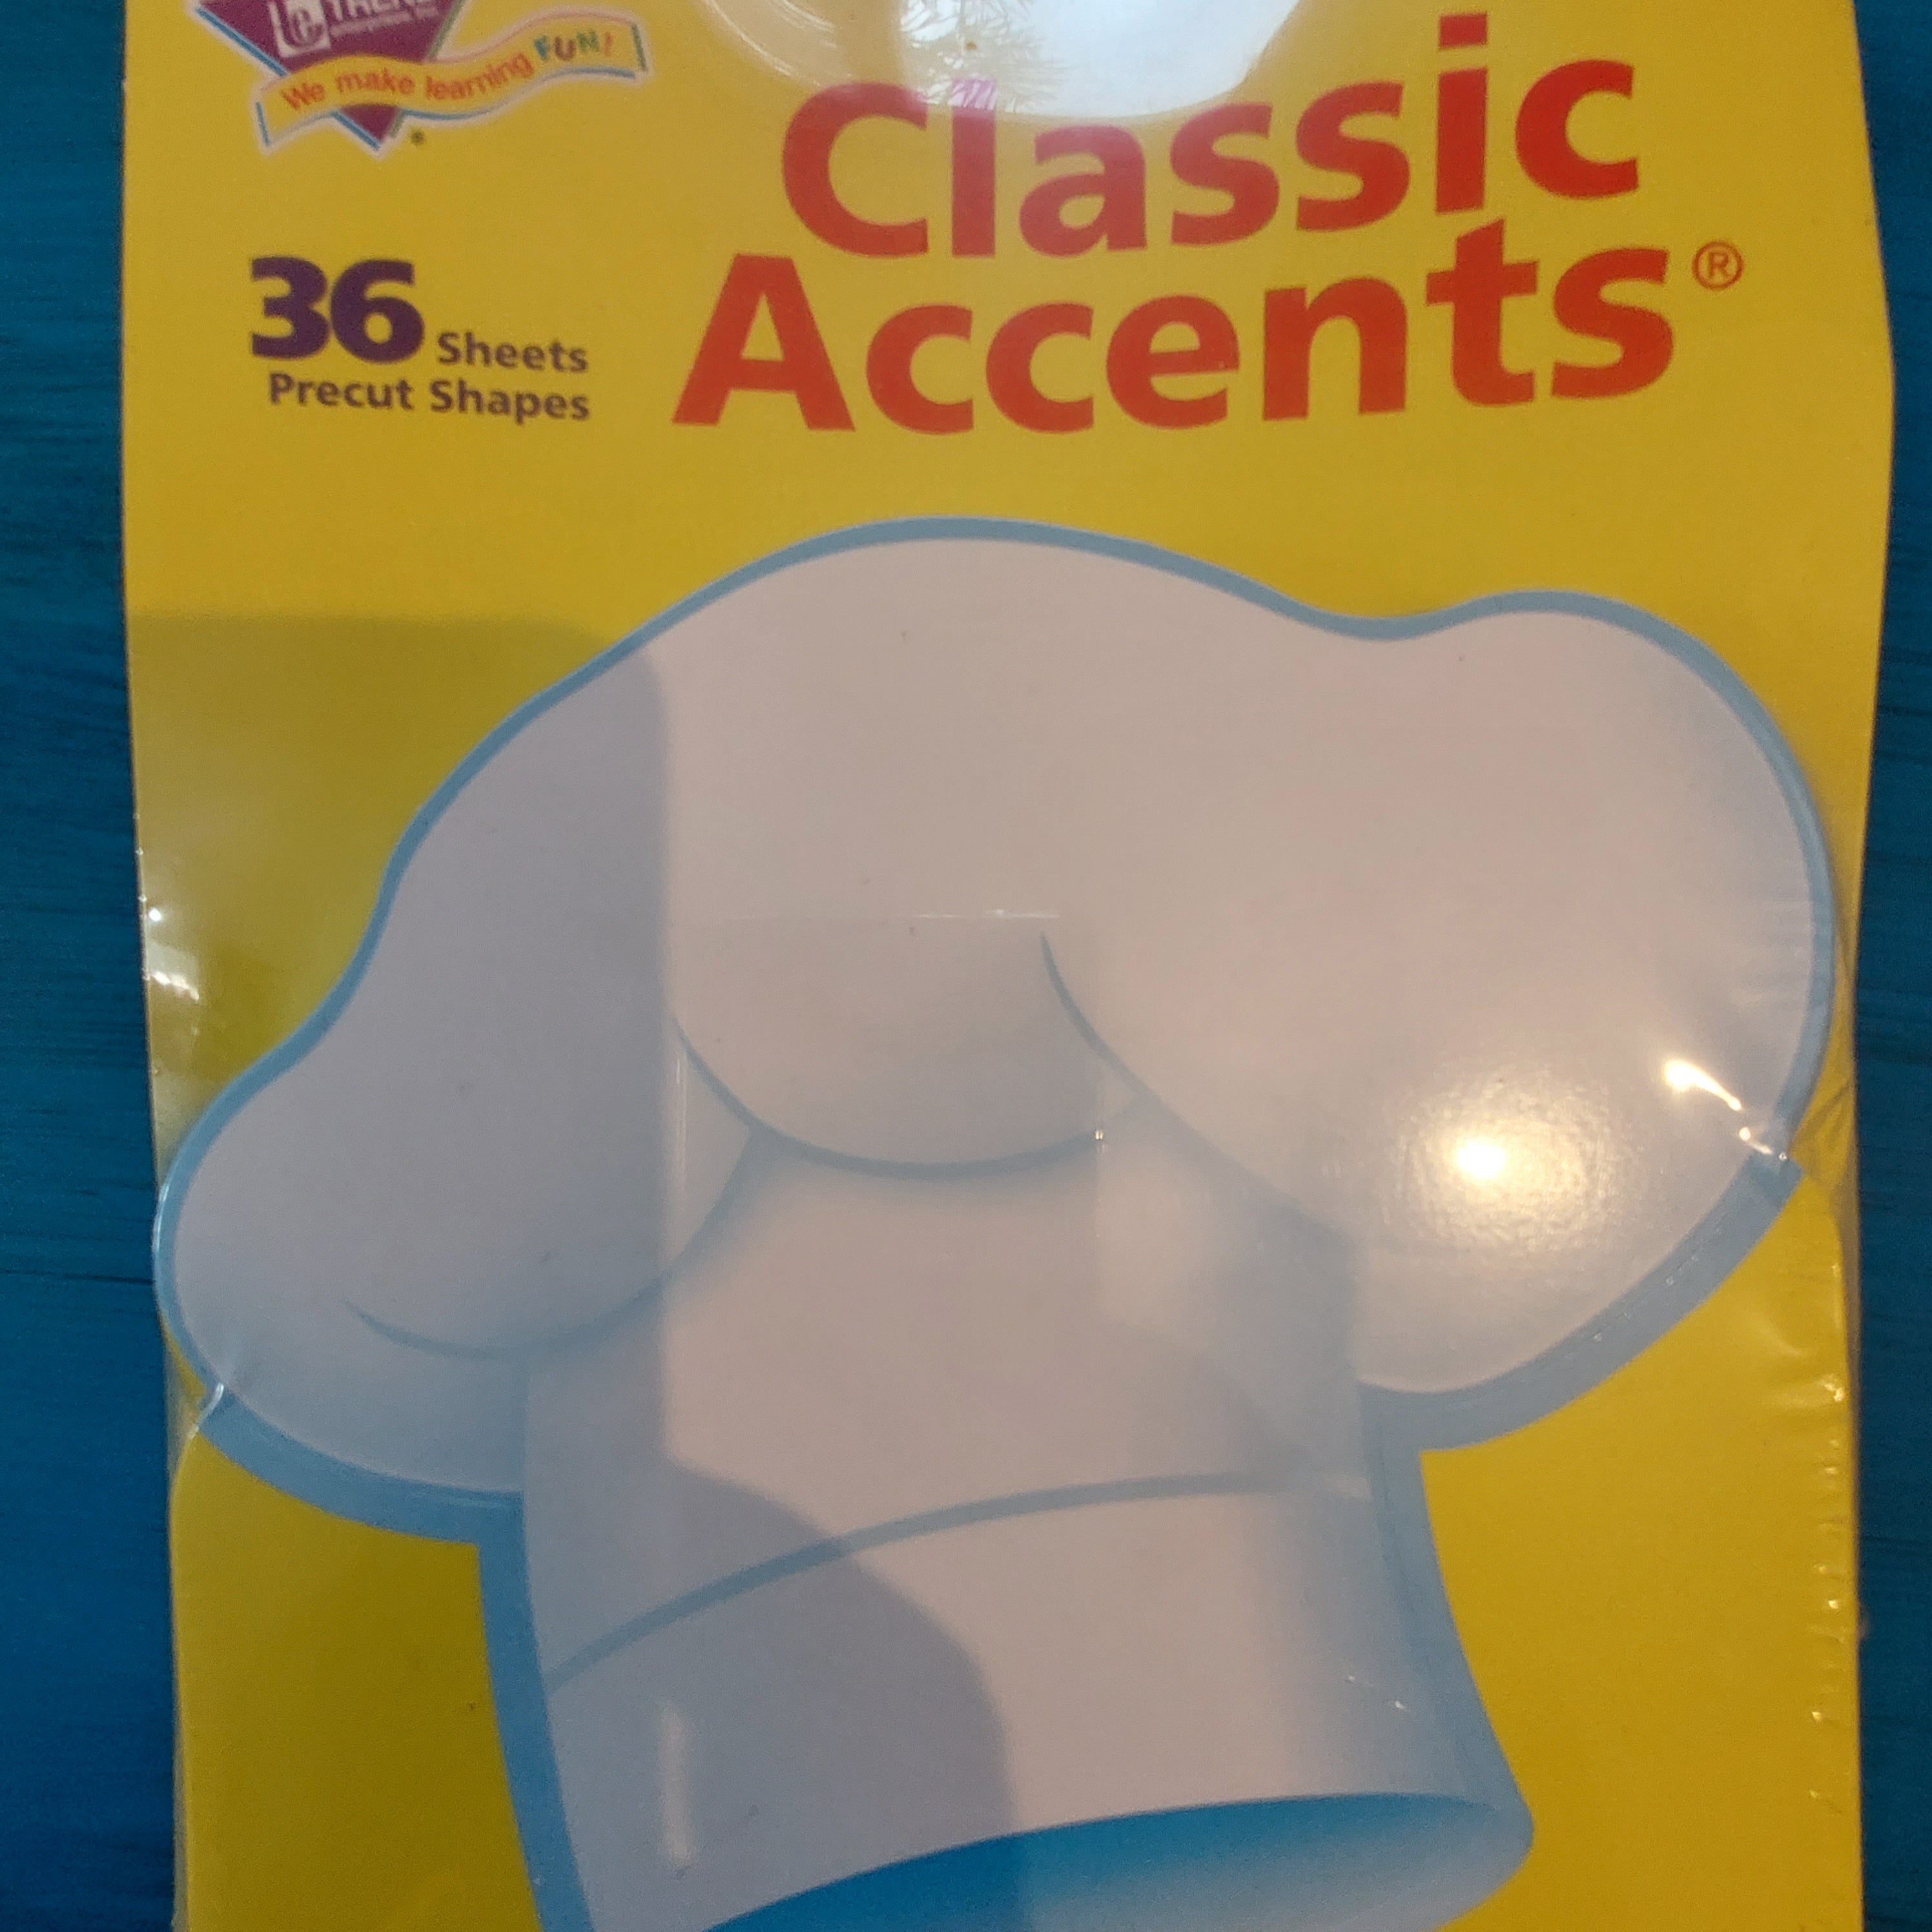 Classic Accents